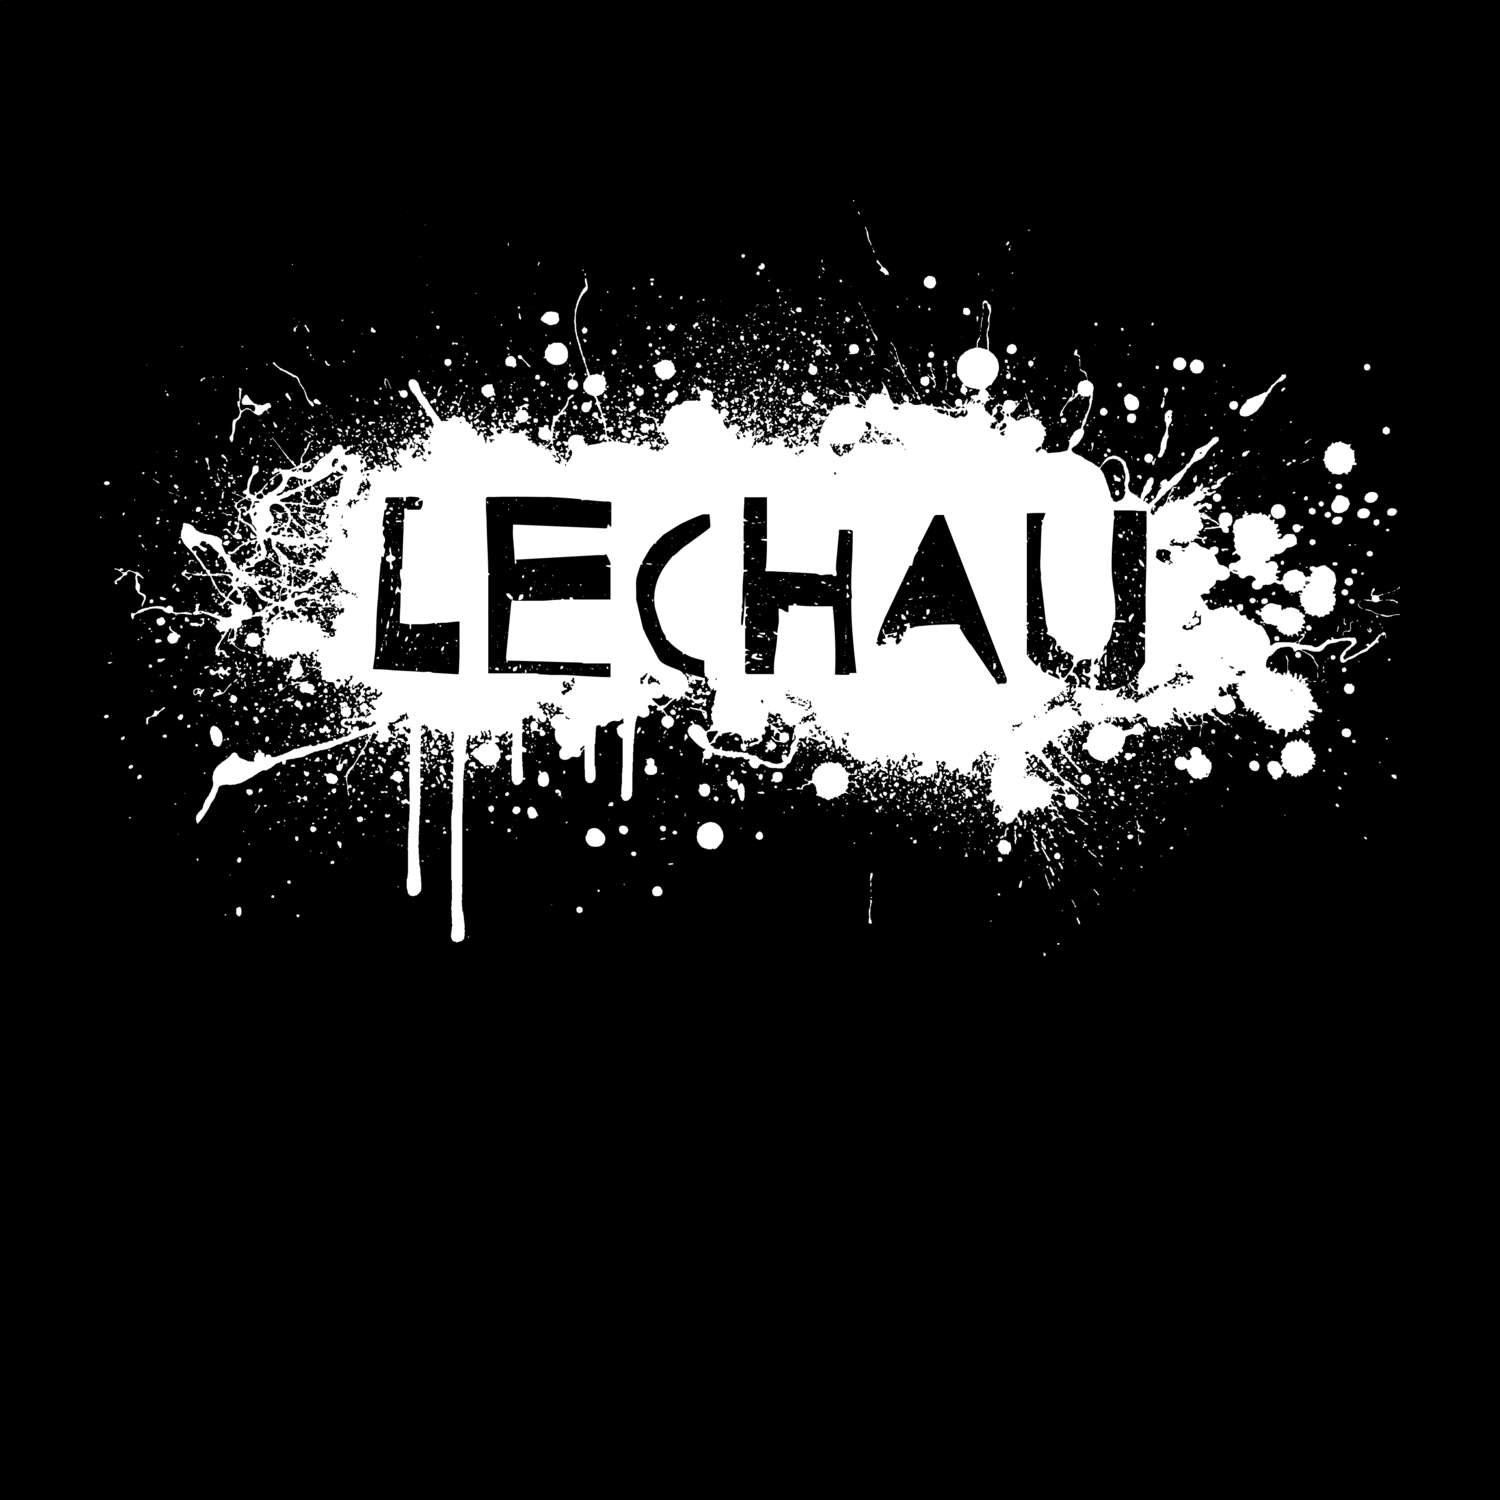 Lechau T-Shirt »Paint Splash Punk«